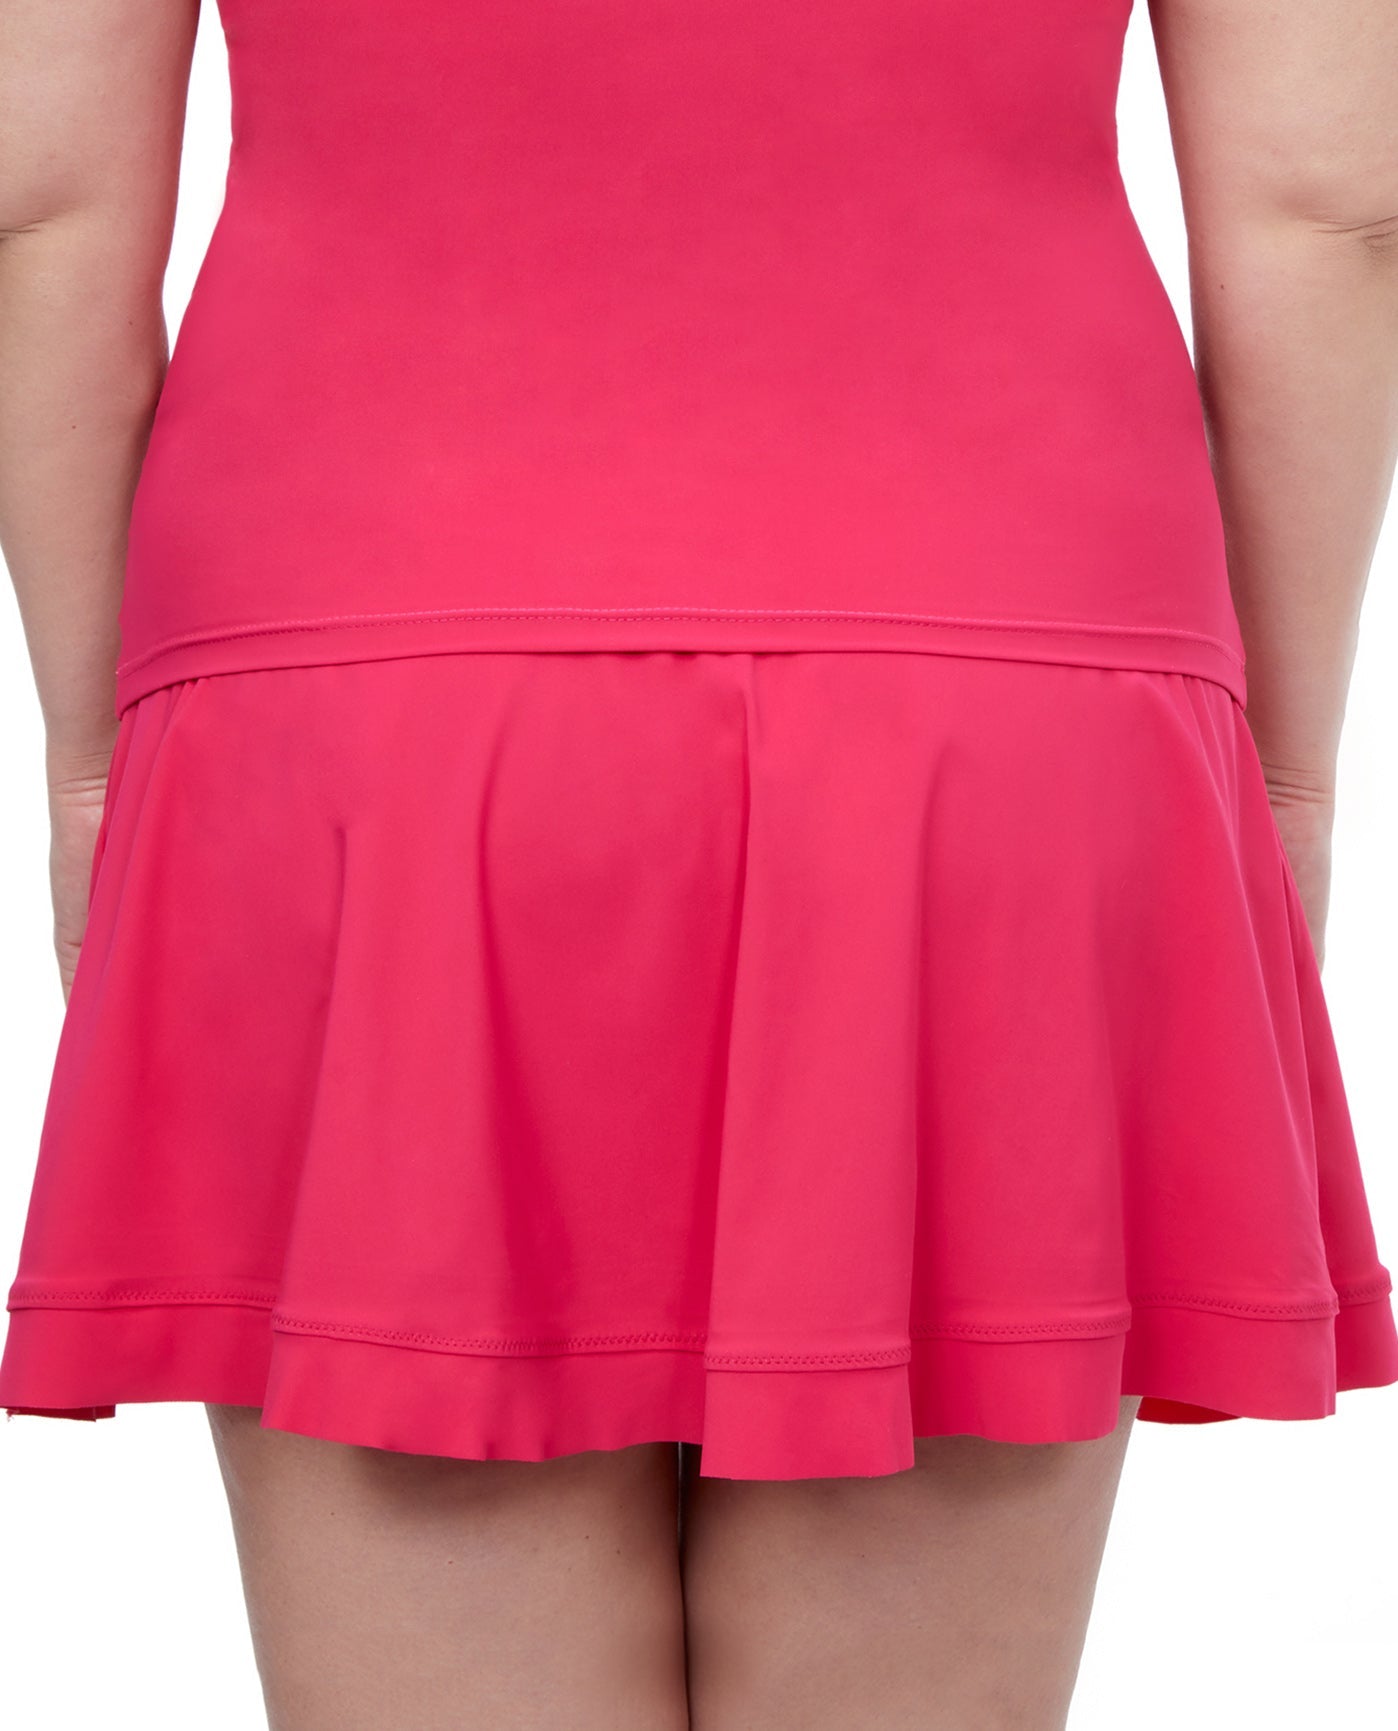 Back View Of Profile By Gottex Tutti Frutti Plus Size Side Slit Cinch Swim Skirt | PROFILE TUTTI FRUTTI PINK